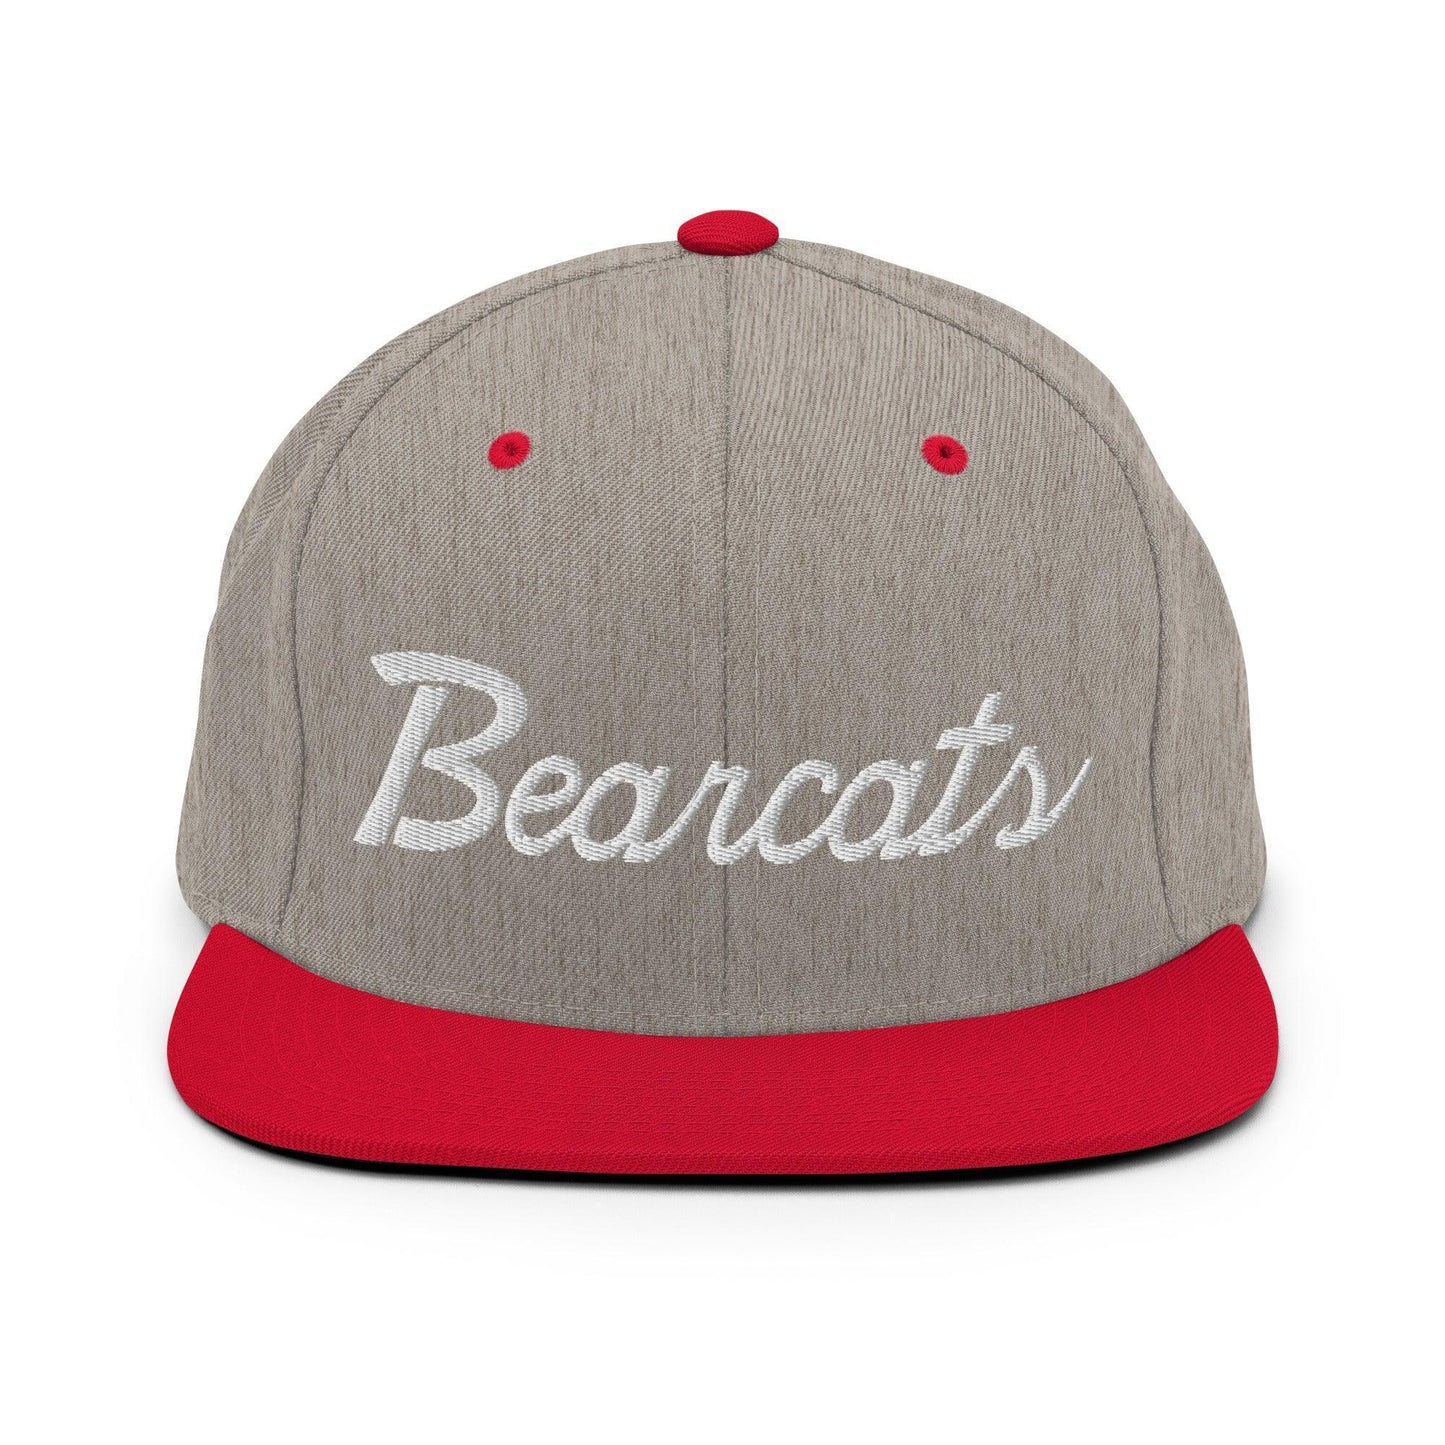 Bearcats School Mascot Script Snapback Hat Heather Grey Red